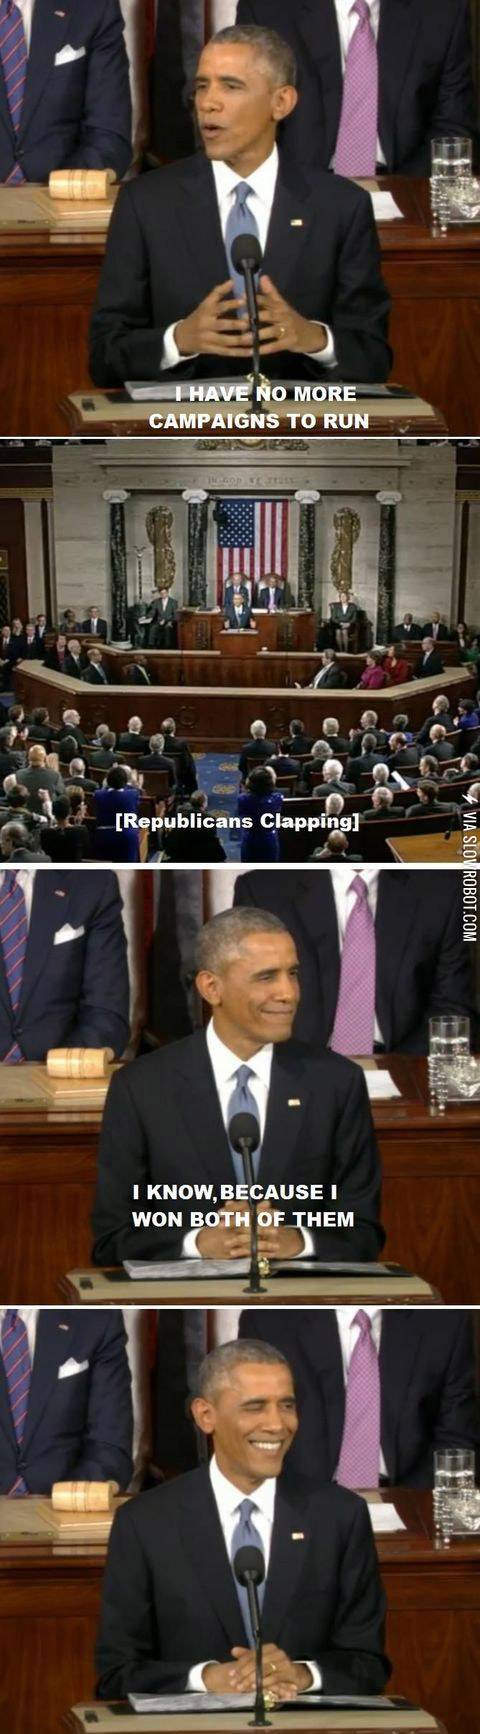 Obama+trolls+Congress.